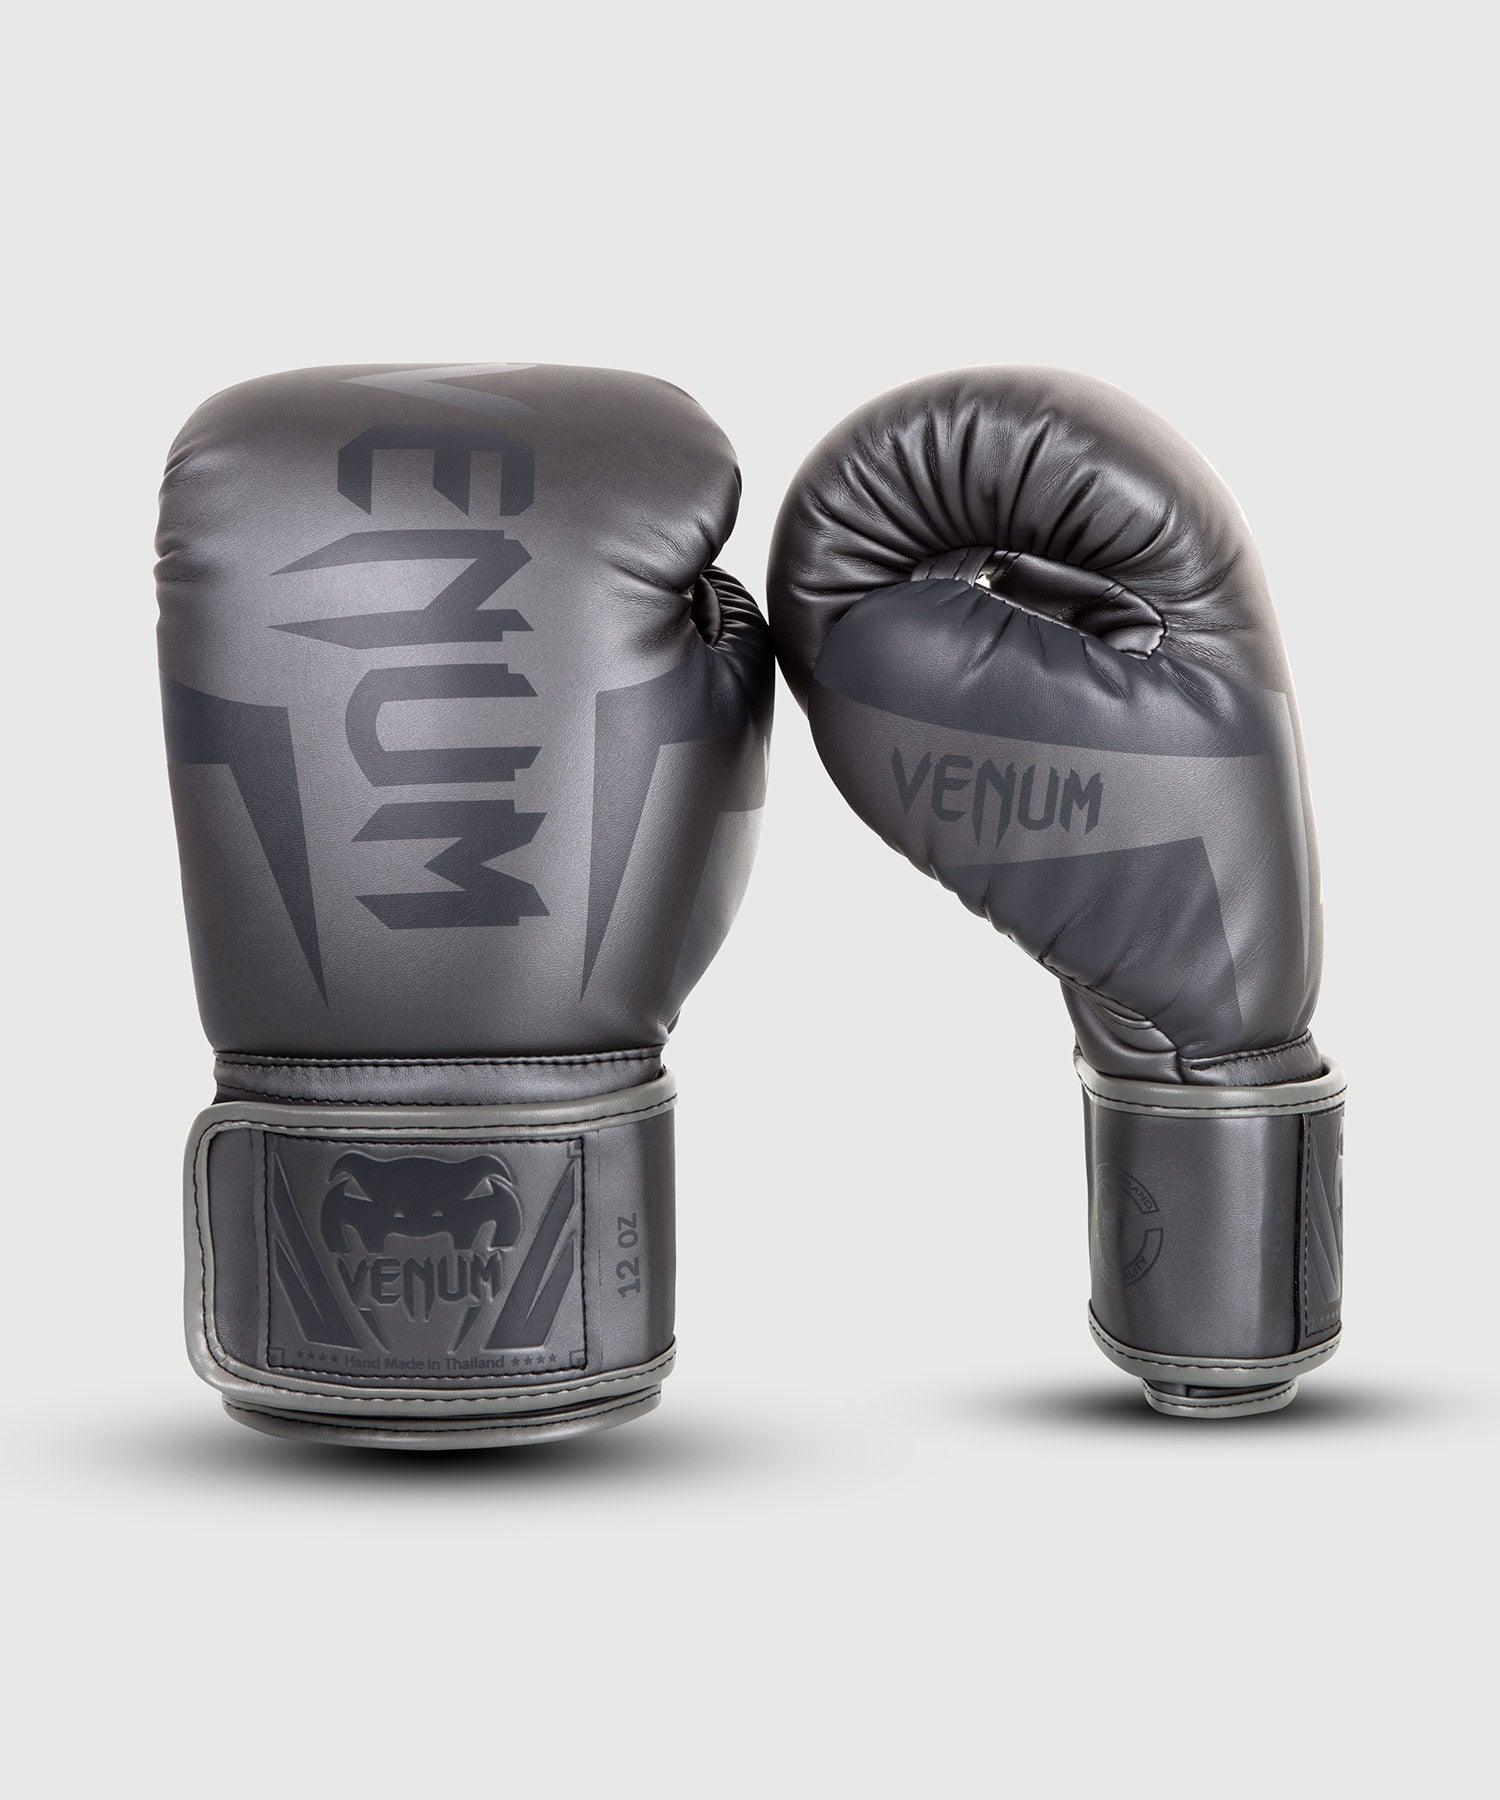 Venum Elite Boxing Gloves - Grey/Grey Picture 1